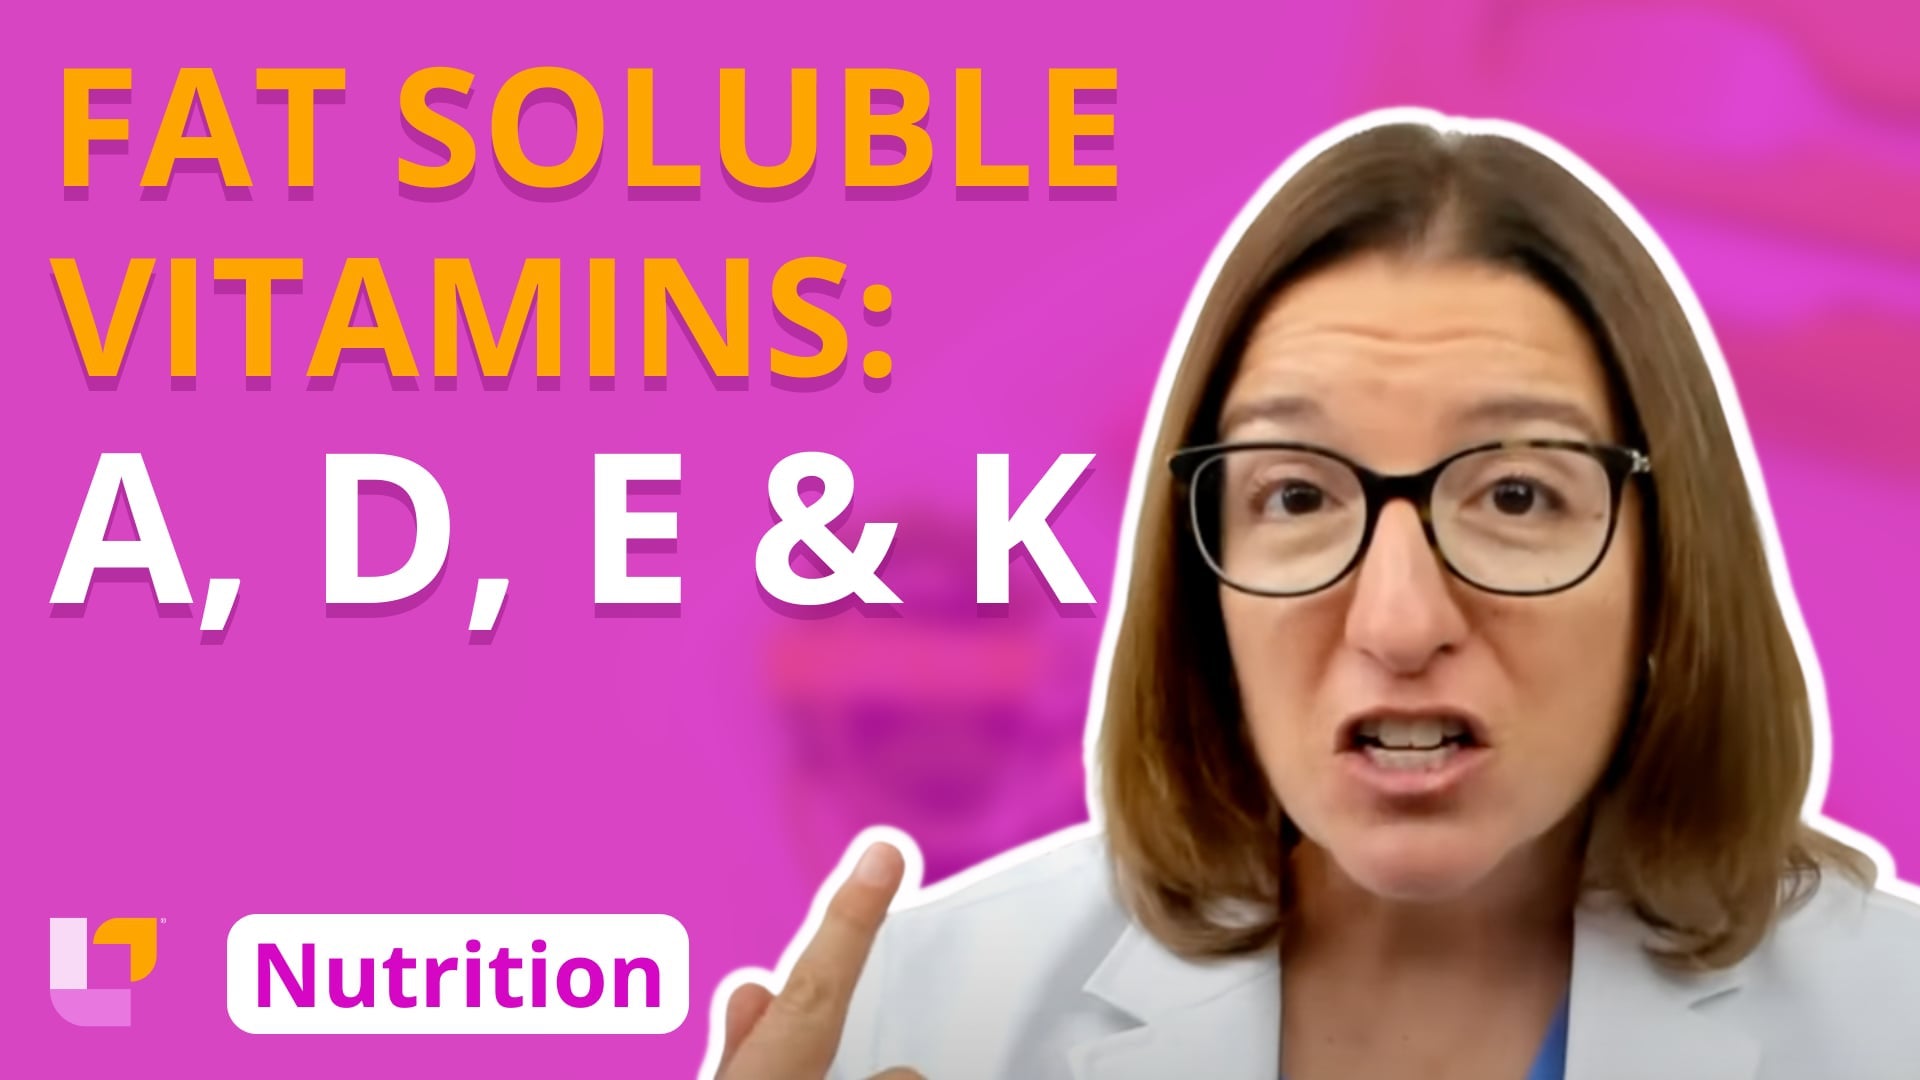 Nutrition, part 4: Fat Soluble Vitamins - Vitamins A, D, E, K - LevelUpRN